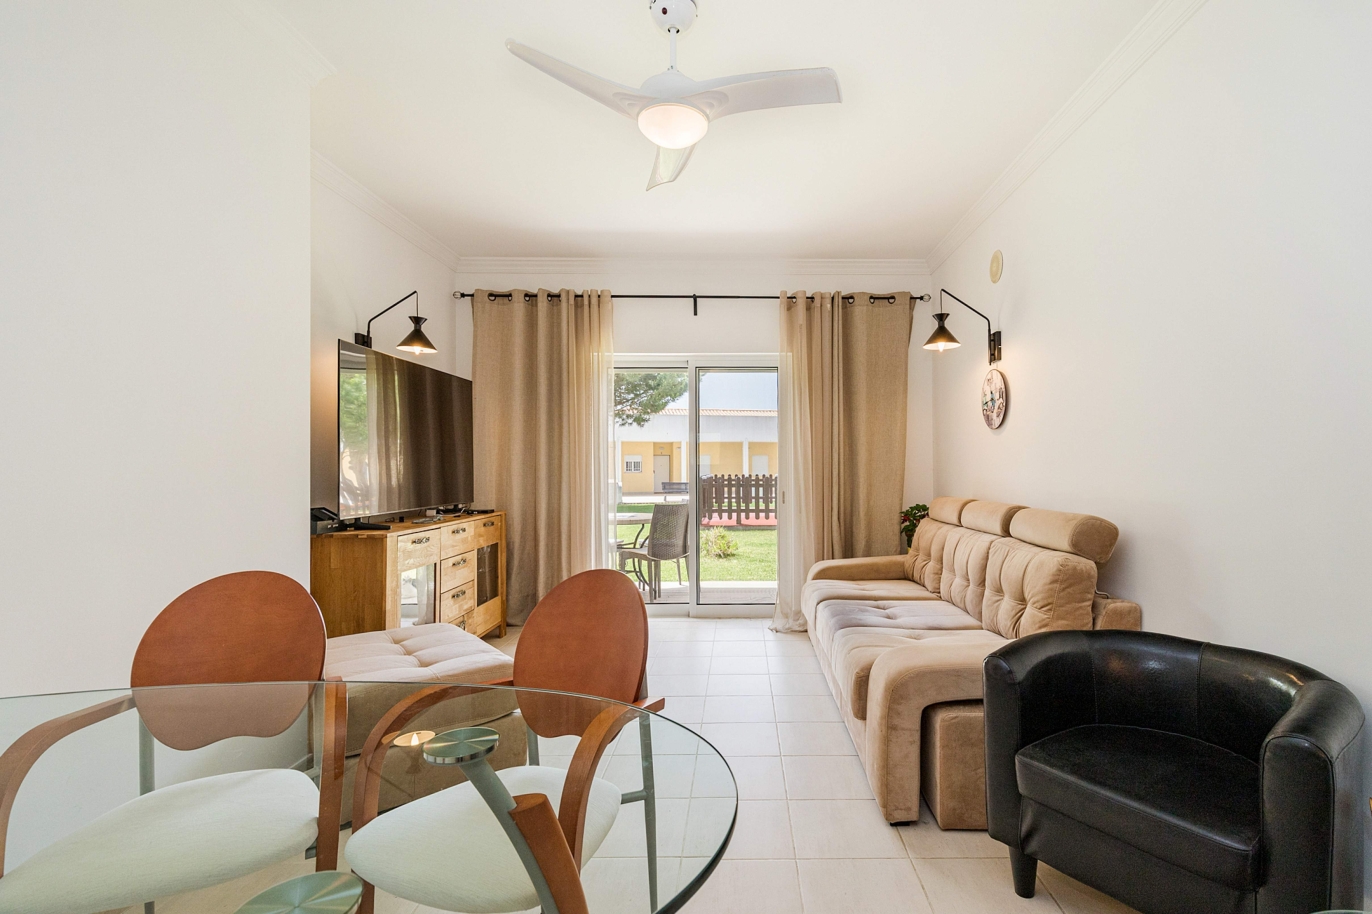 Apartamento T2, em condominio, para venda, Albufeira, Algarve_201445